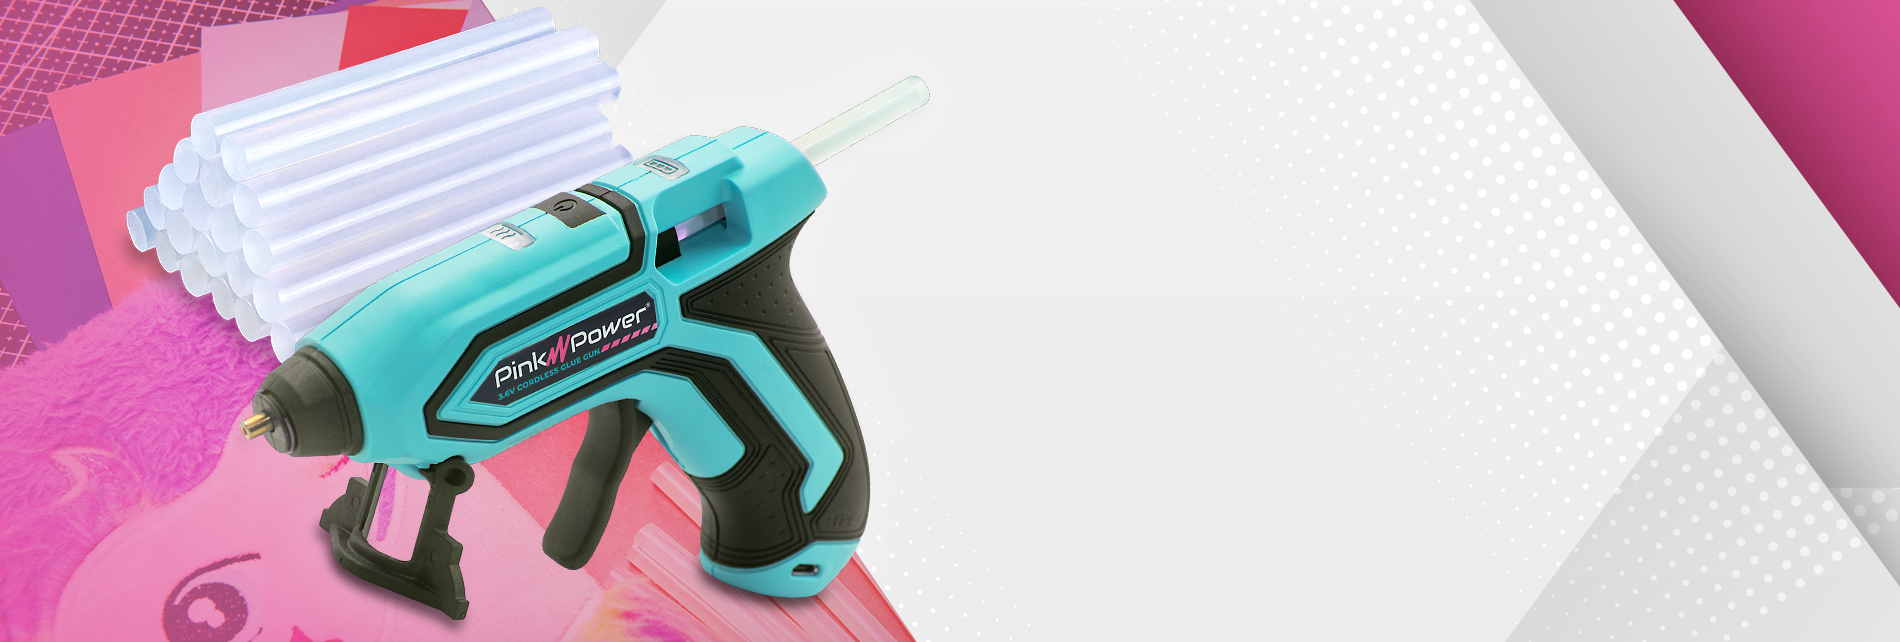 Cordless Glue Gun - AQUA SPLASH – Pink Power